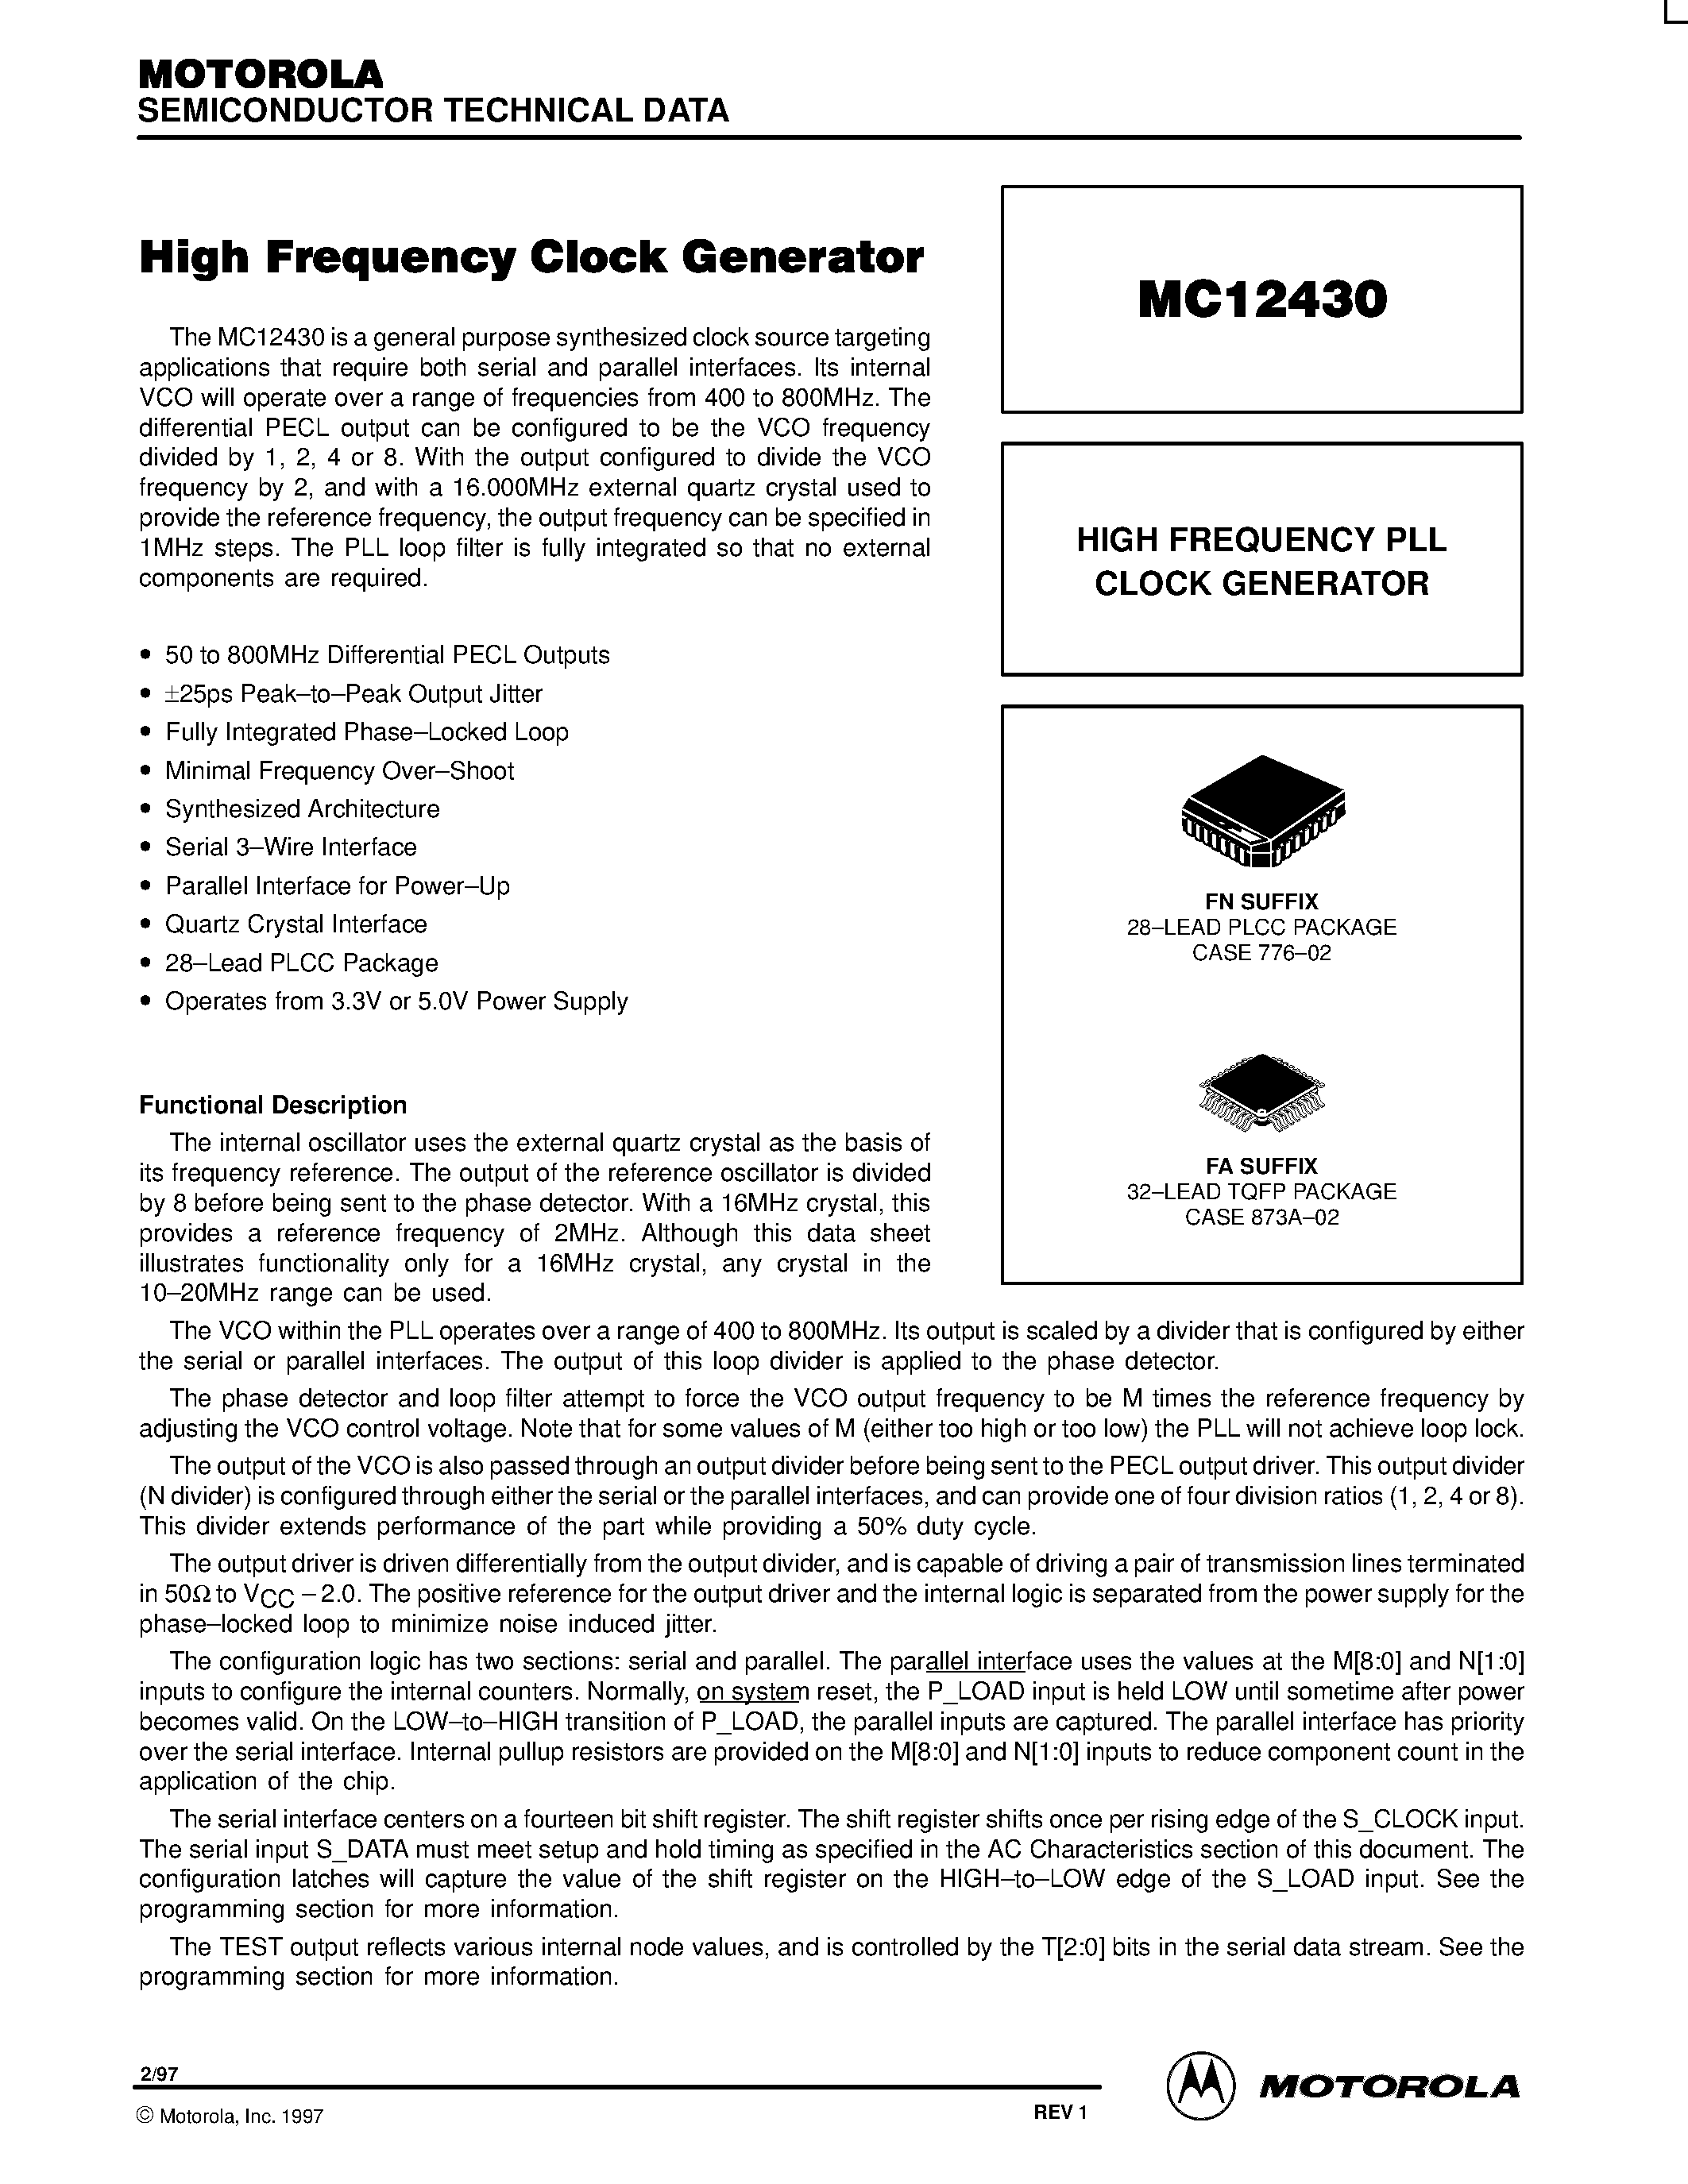 Даташит MC12430FN - HIGH FREQUENCY PLL CLOCK GENERATOR страница 1